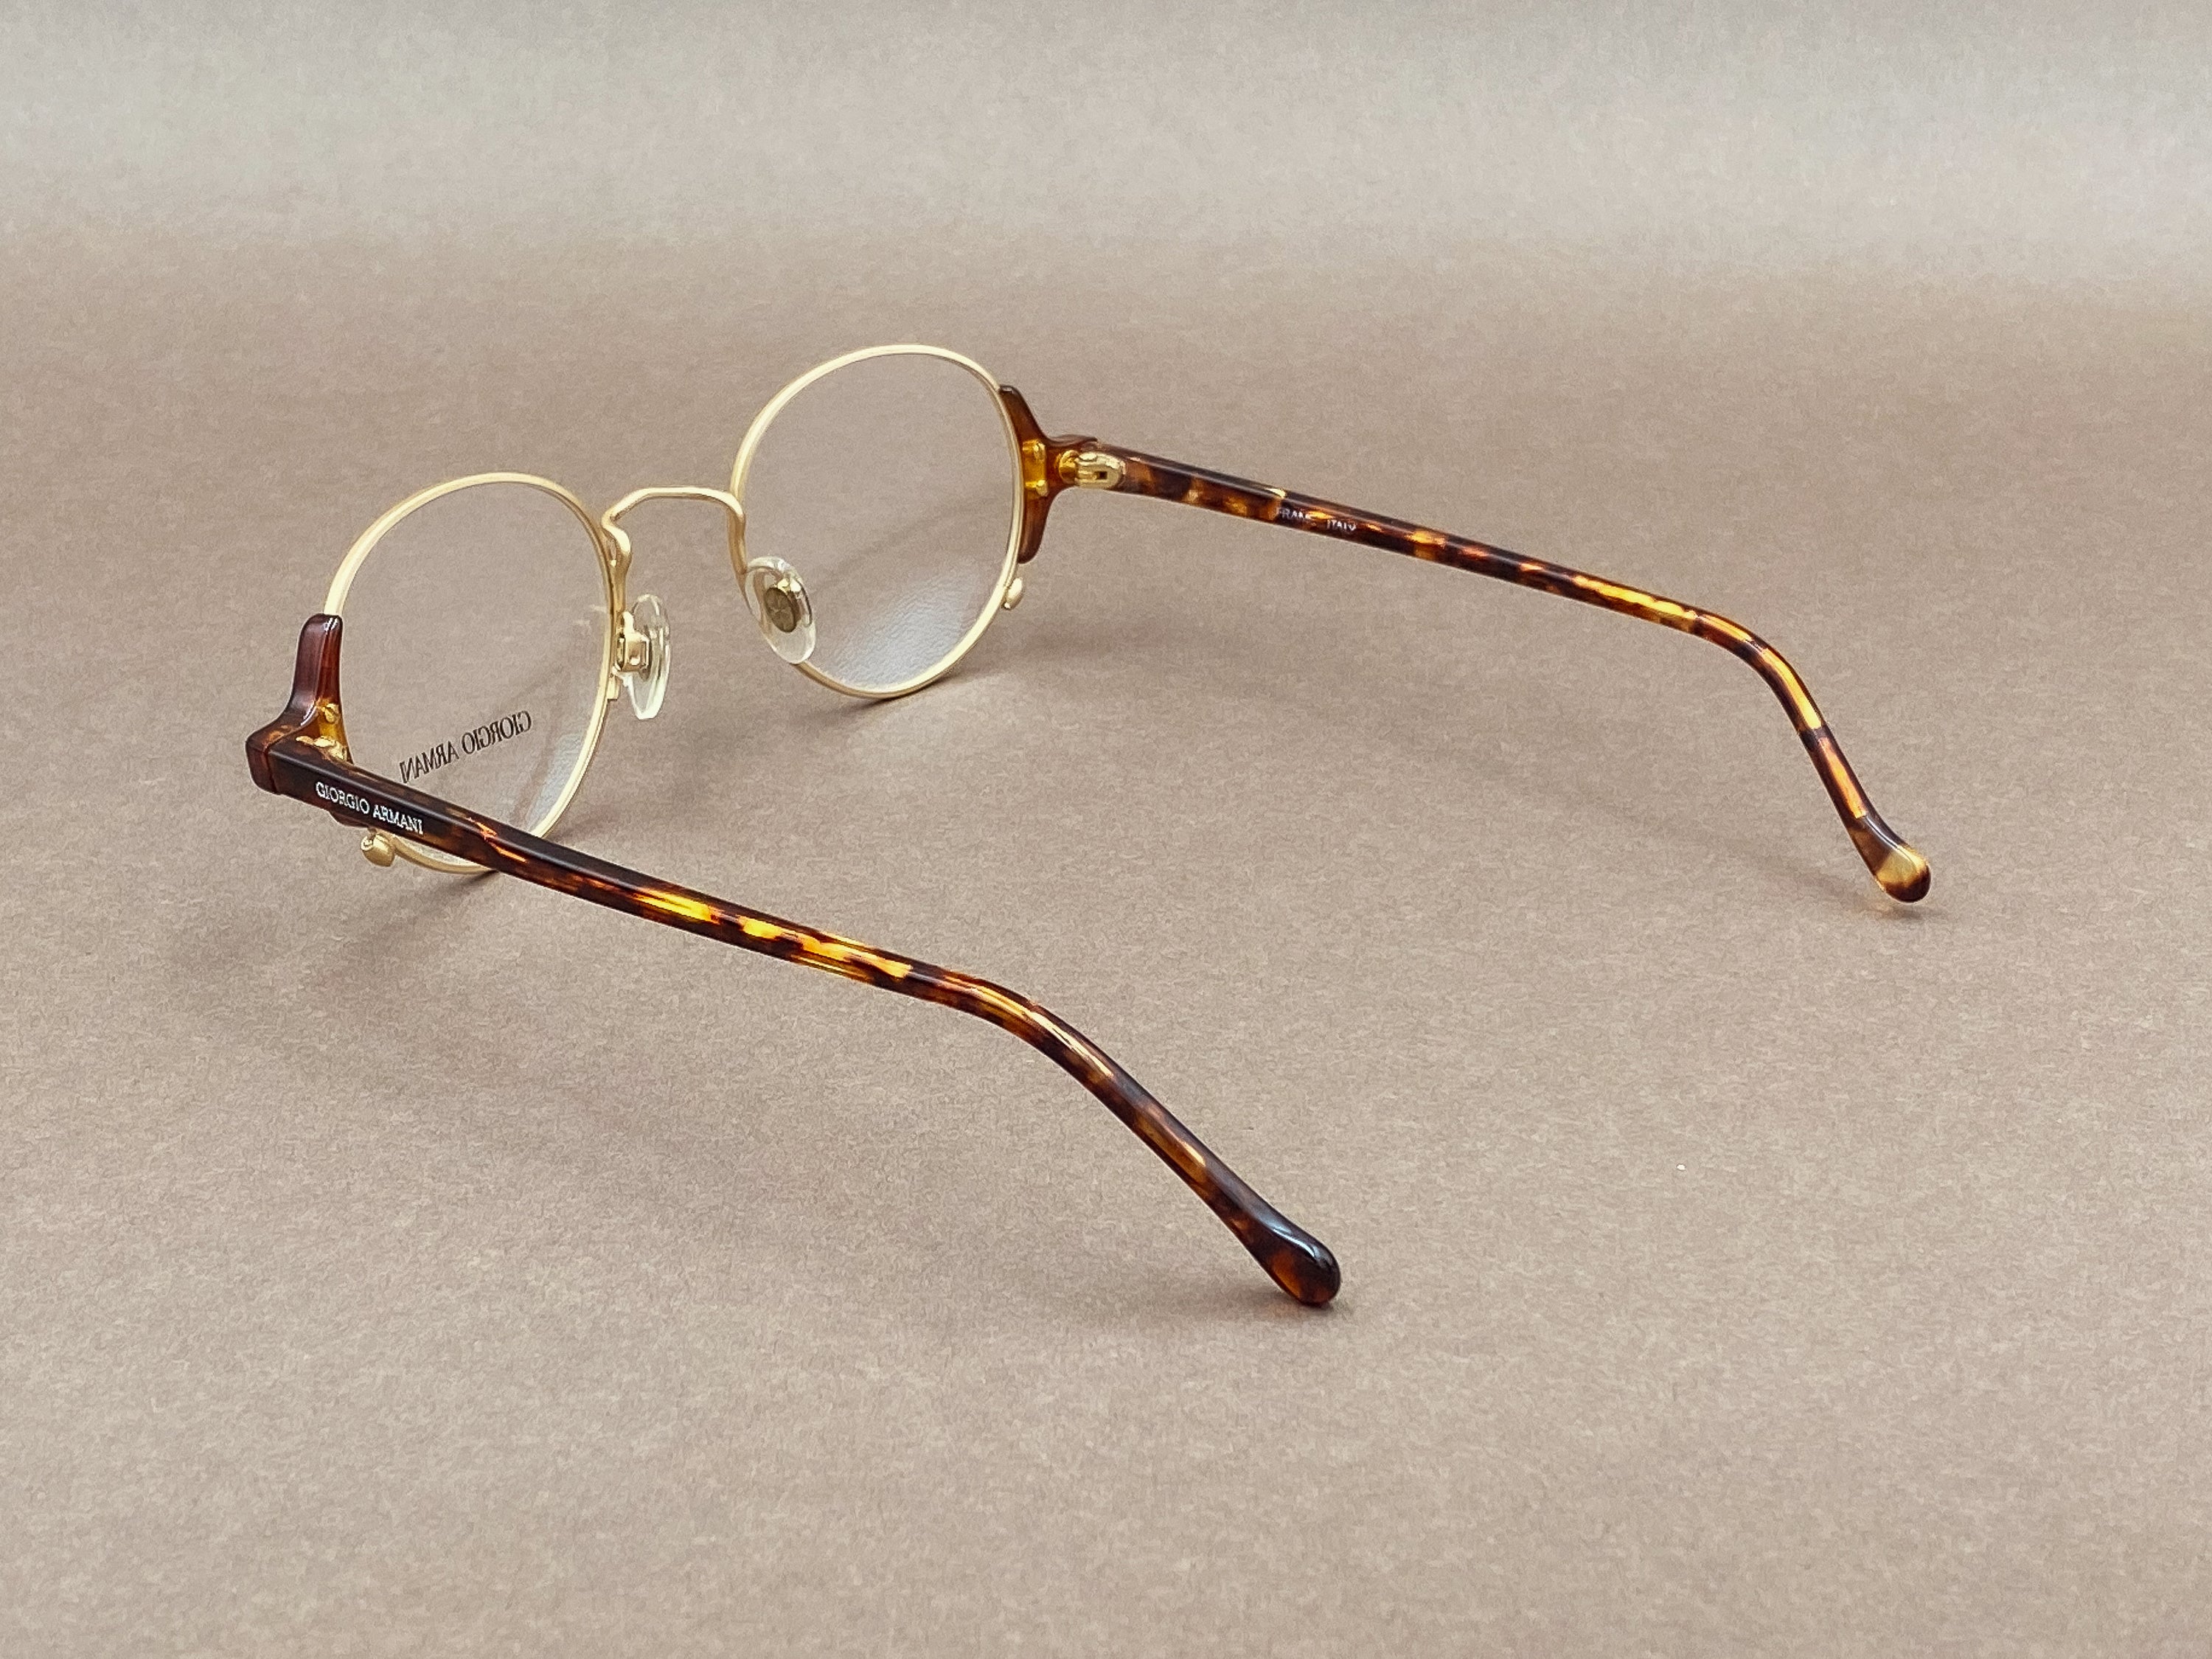 Giorgio Armani 333 eyeglasses